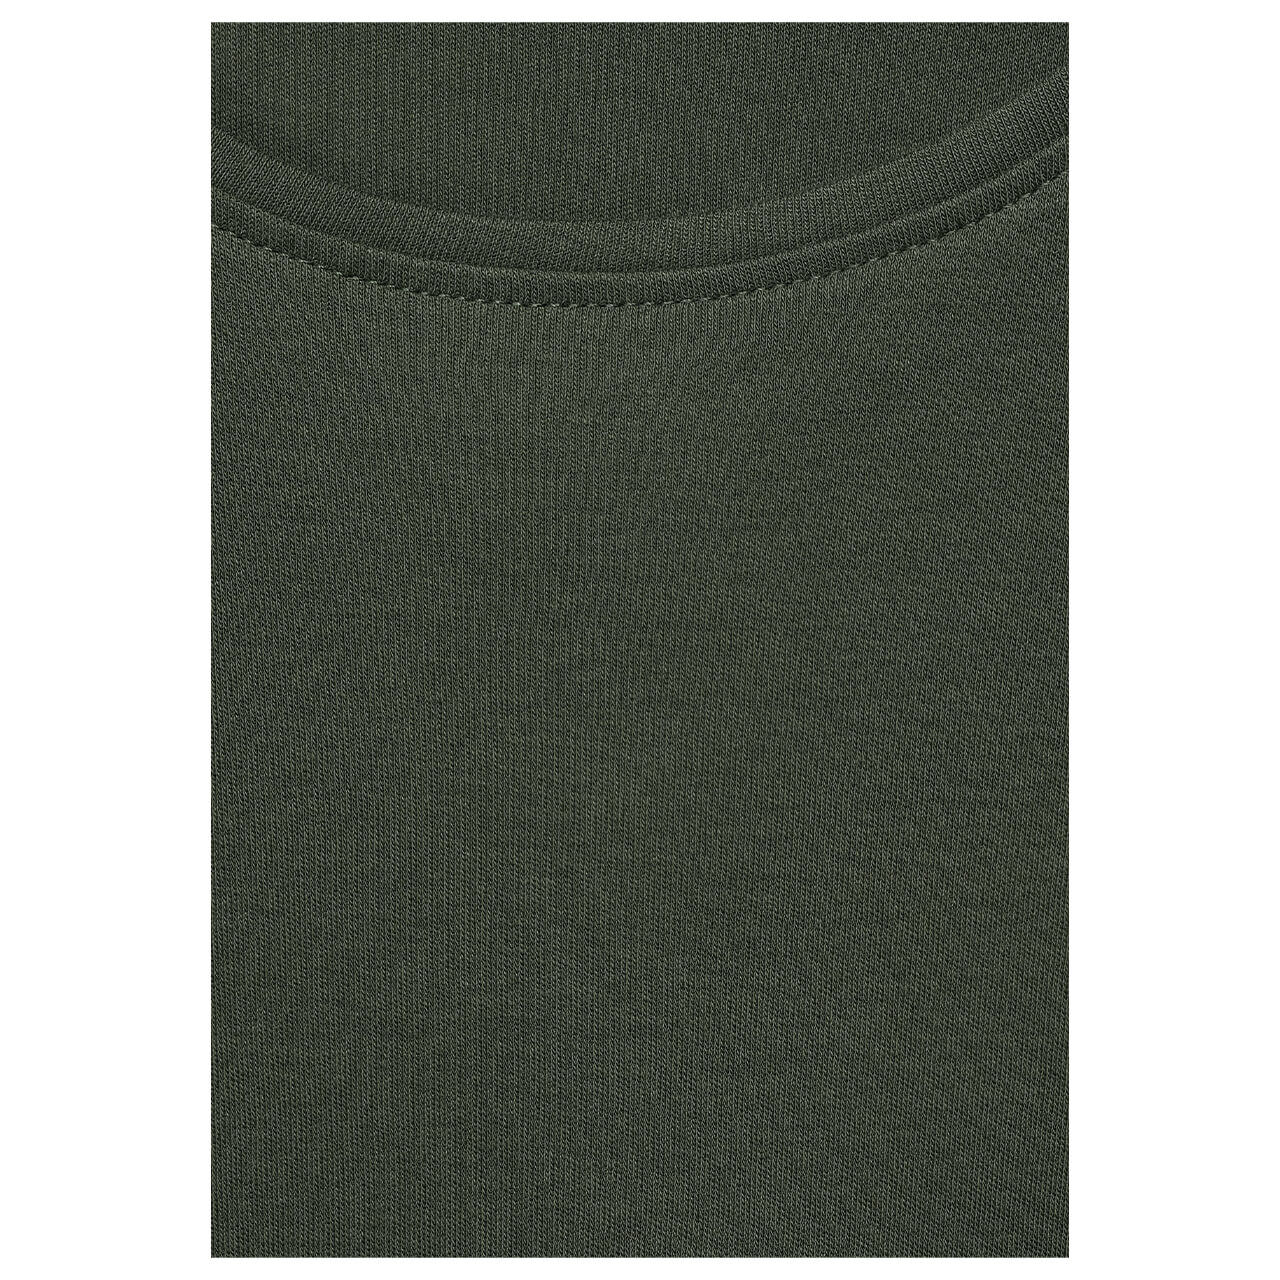 Cecil Pia Langarm Shirt für Damen in Olivgrün, FarbNr.: 13036